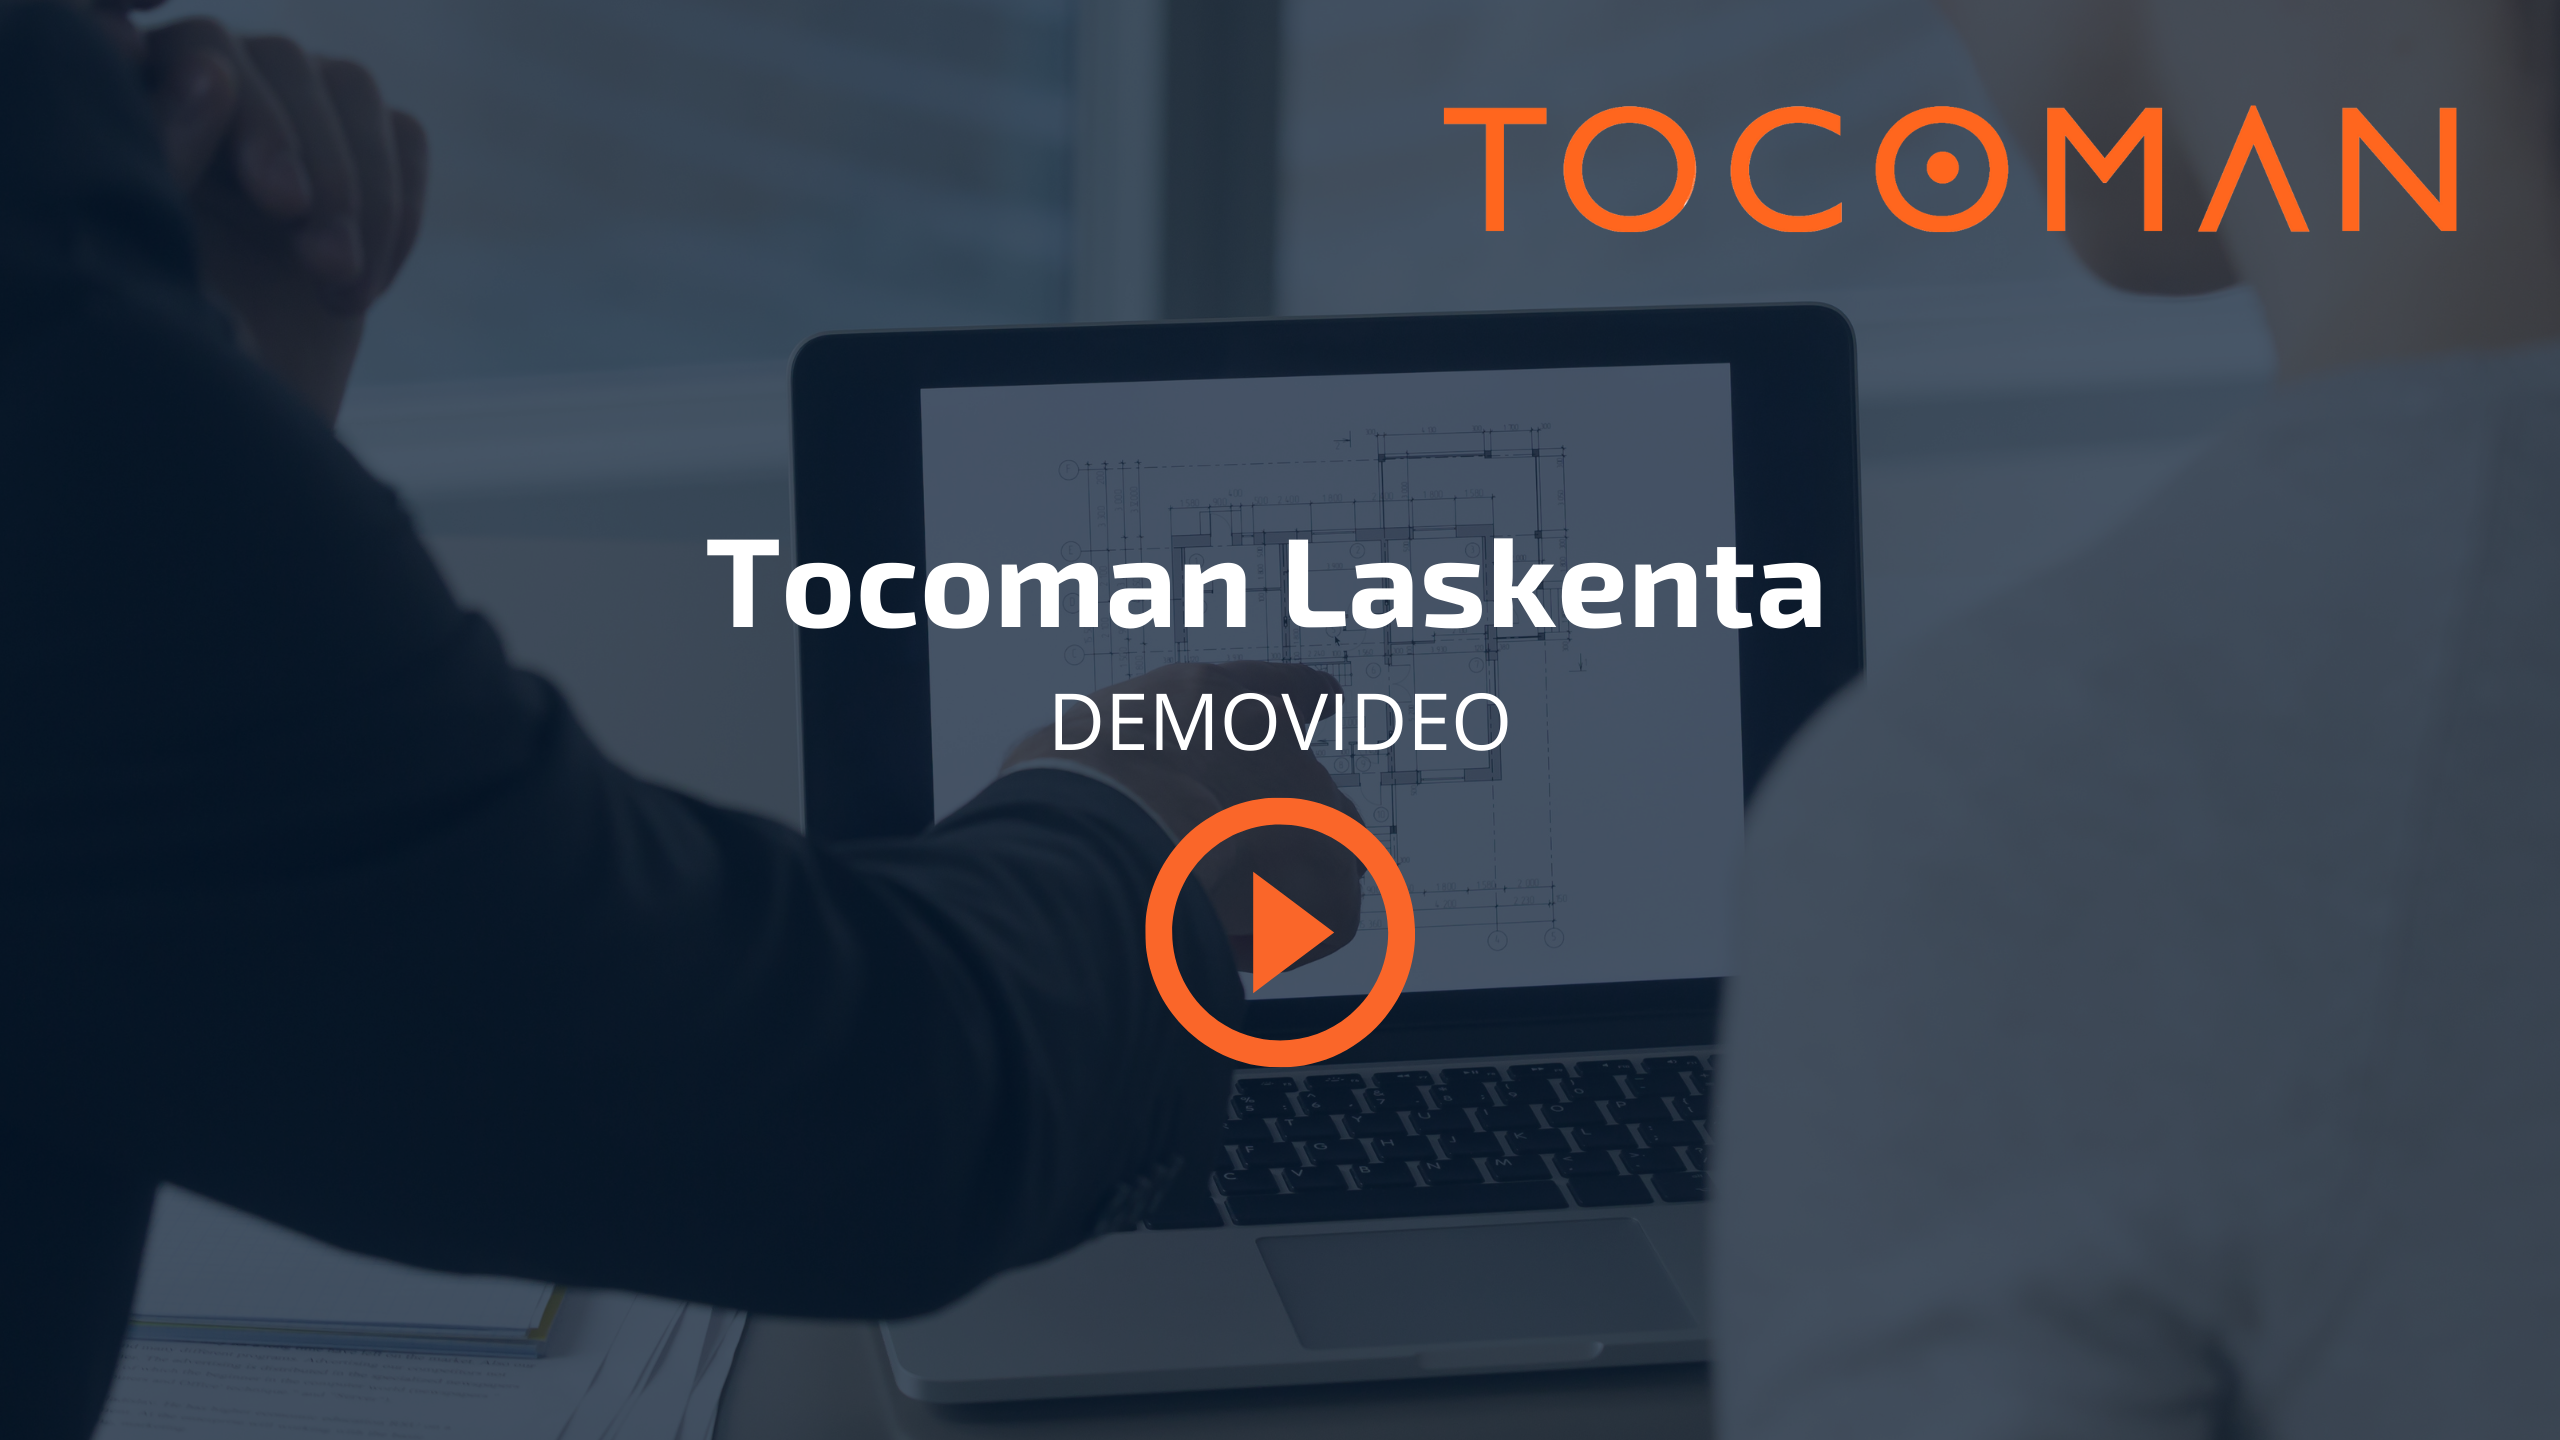 Tocoman Laskenta demovideo